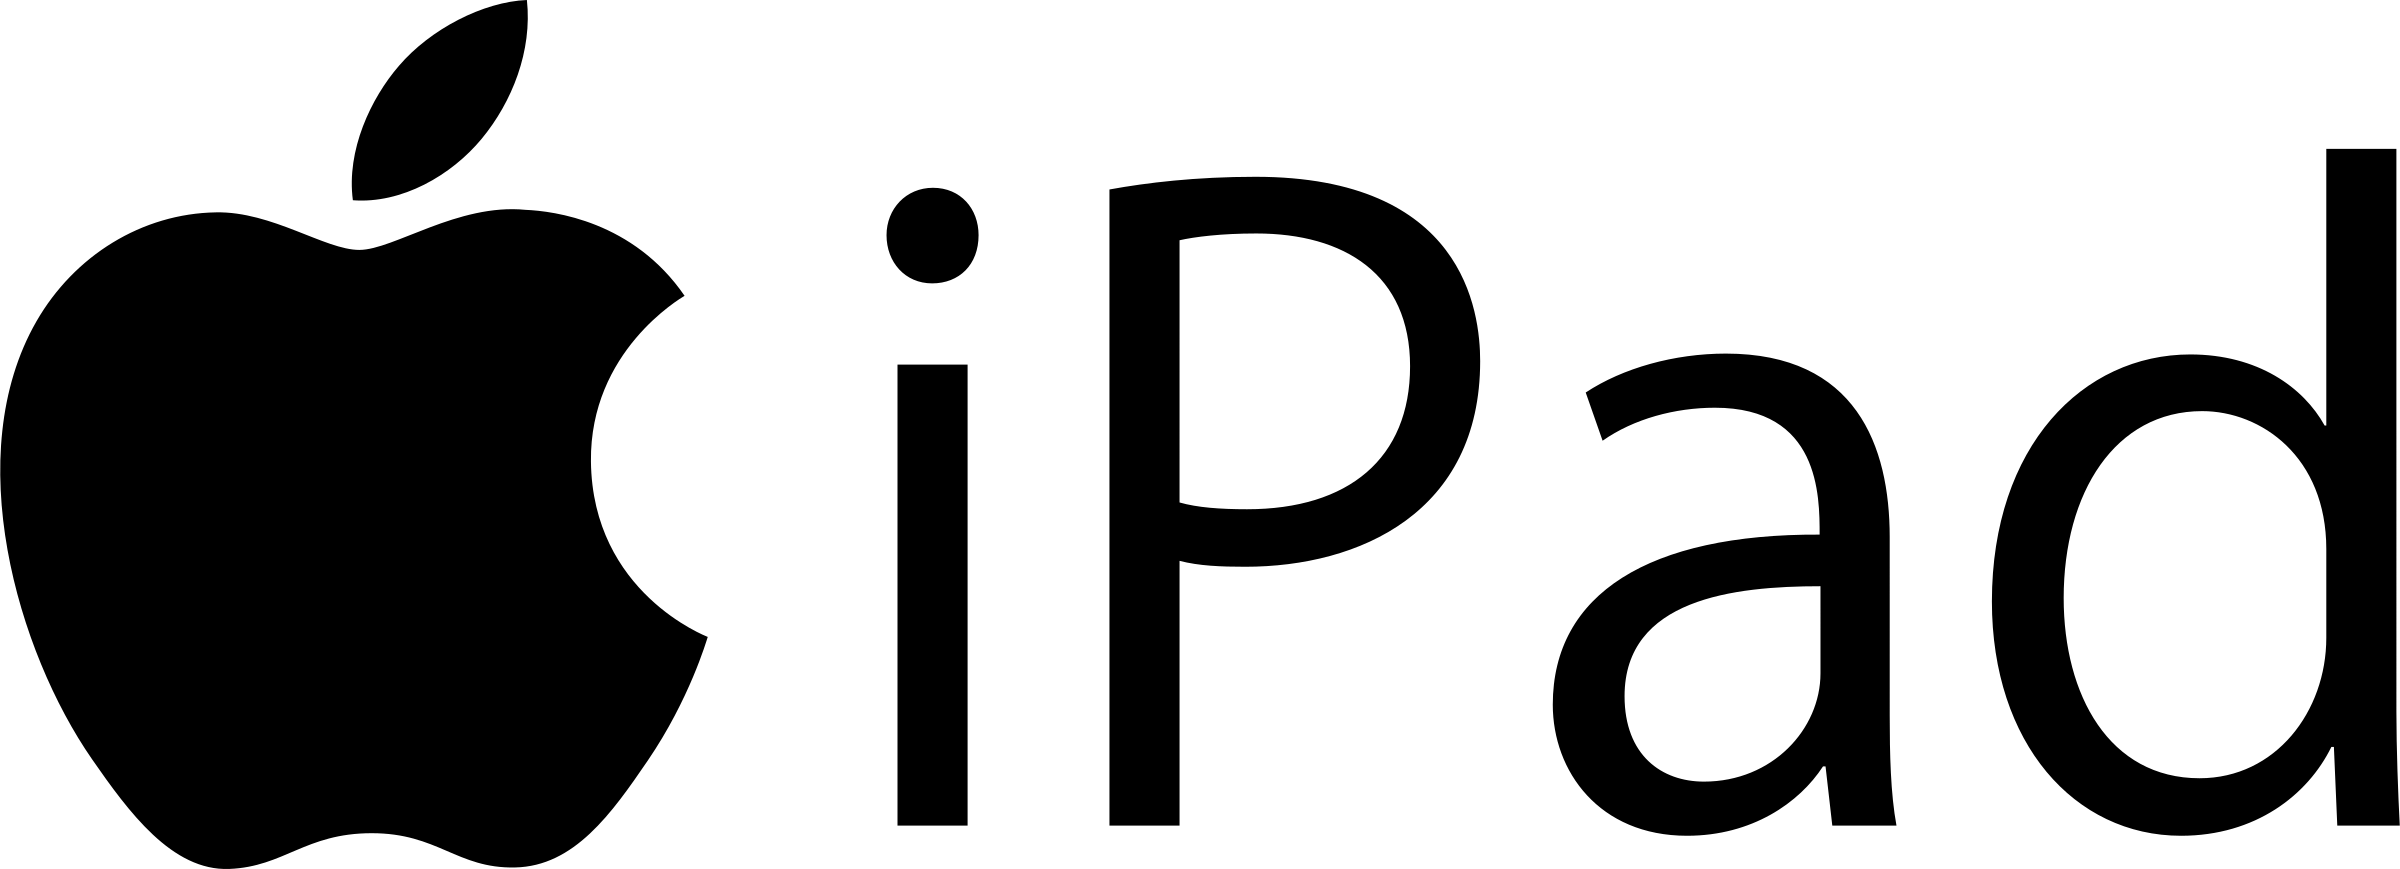 Ipad Apple Logo Black And White - Apple Ipad Logo Png (2400x869)